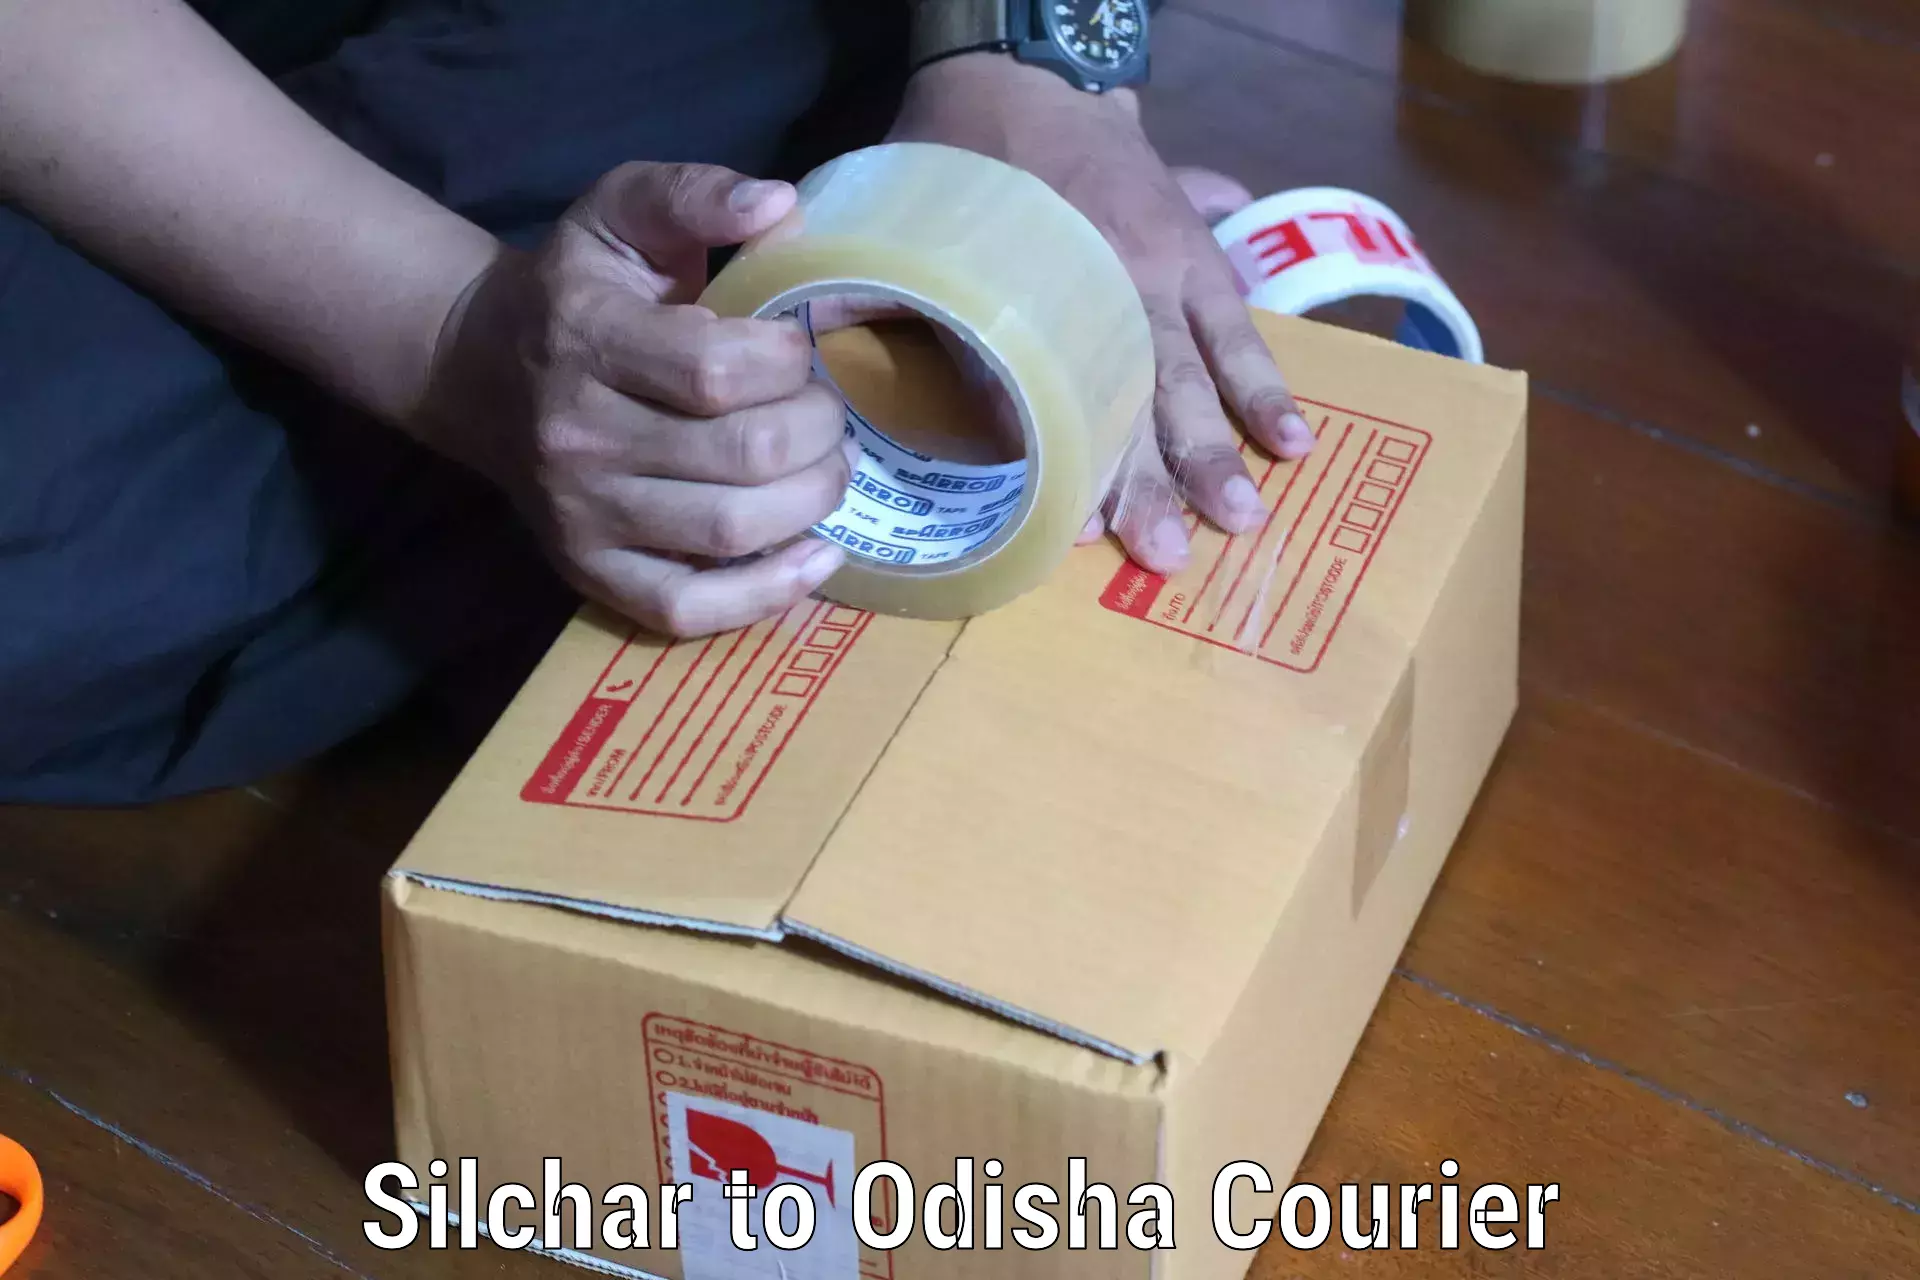 User-friendly delivery service Silchar to Binjharpur